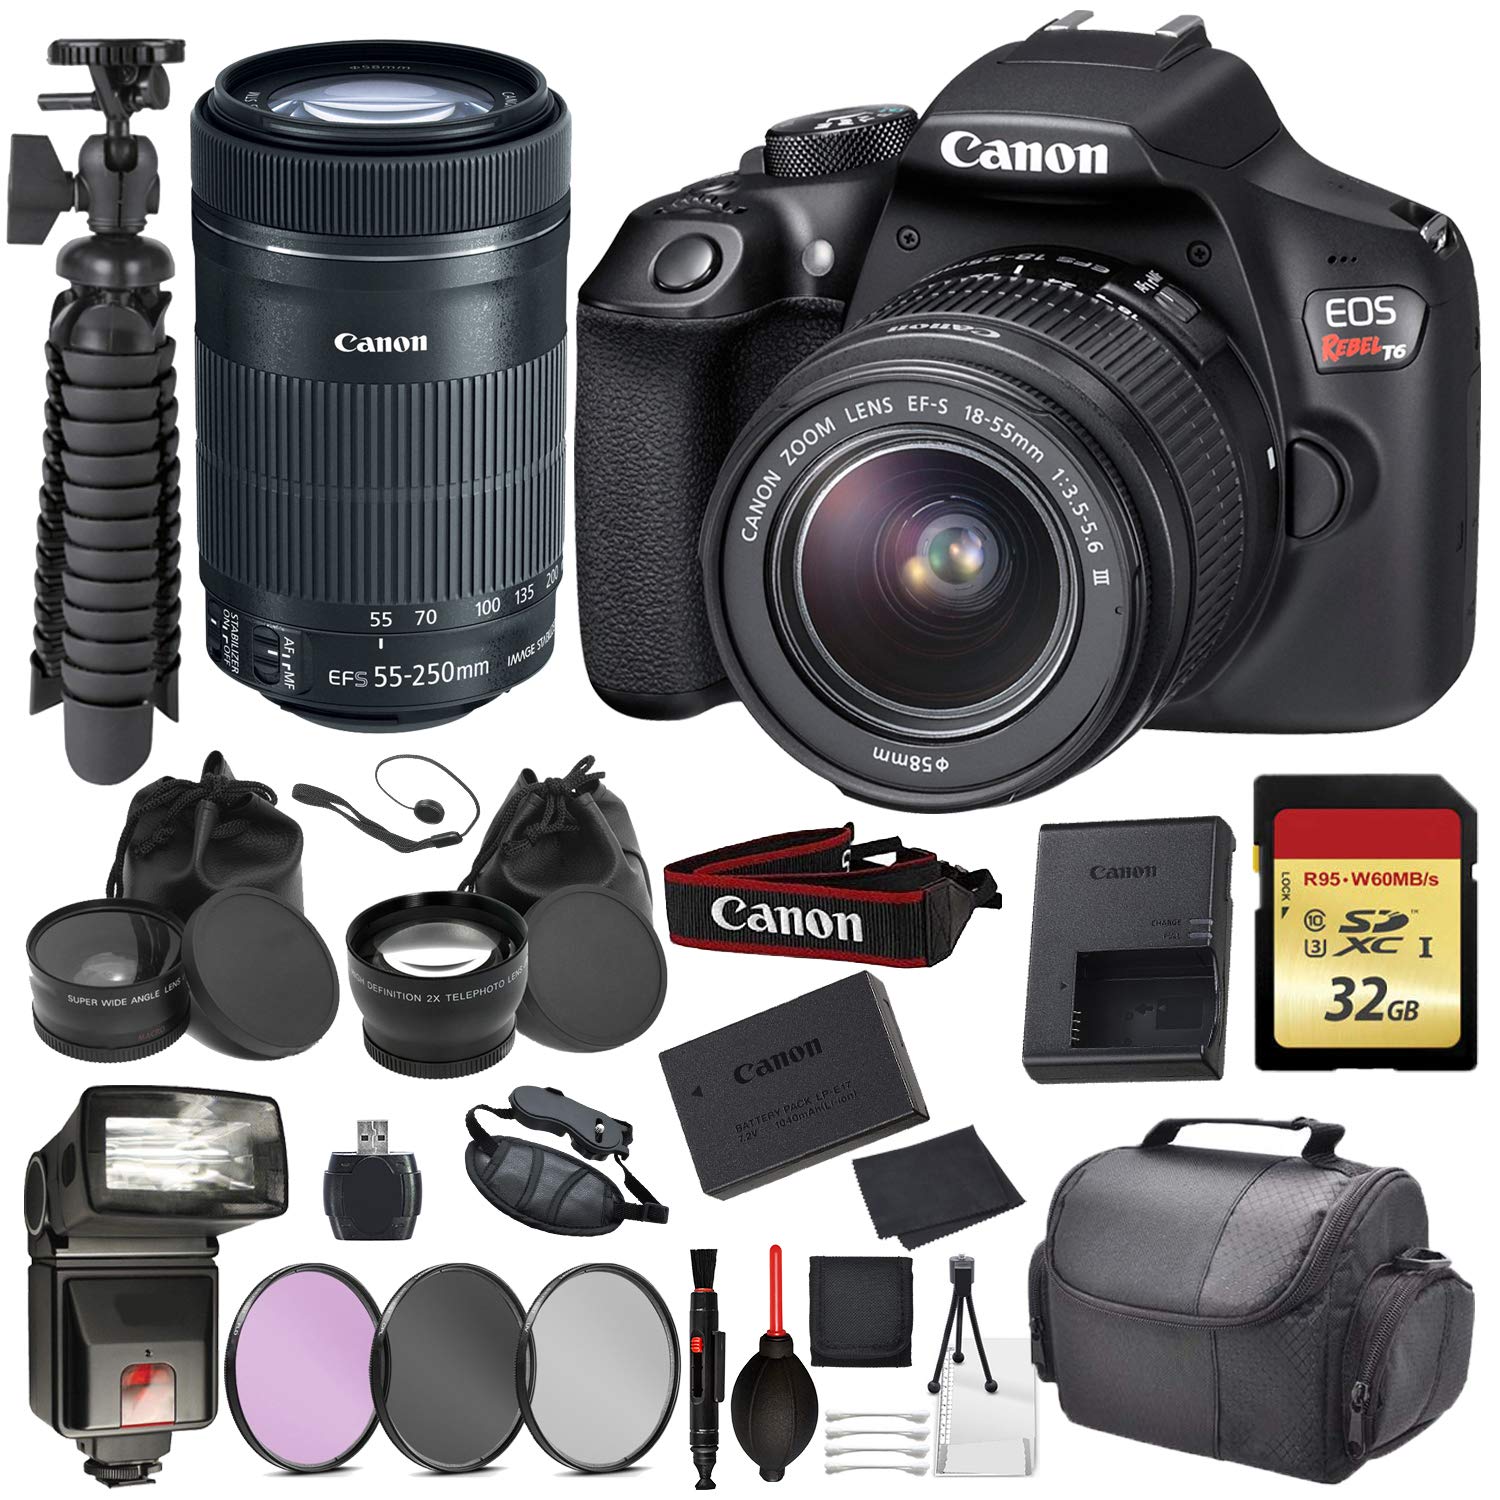 Canon EOS Rebel T6 Digital SLR Camera with EF-S 18-55mm + EF-S 55-250mm STM (Black) Essential Accessory Bundle Package D